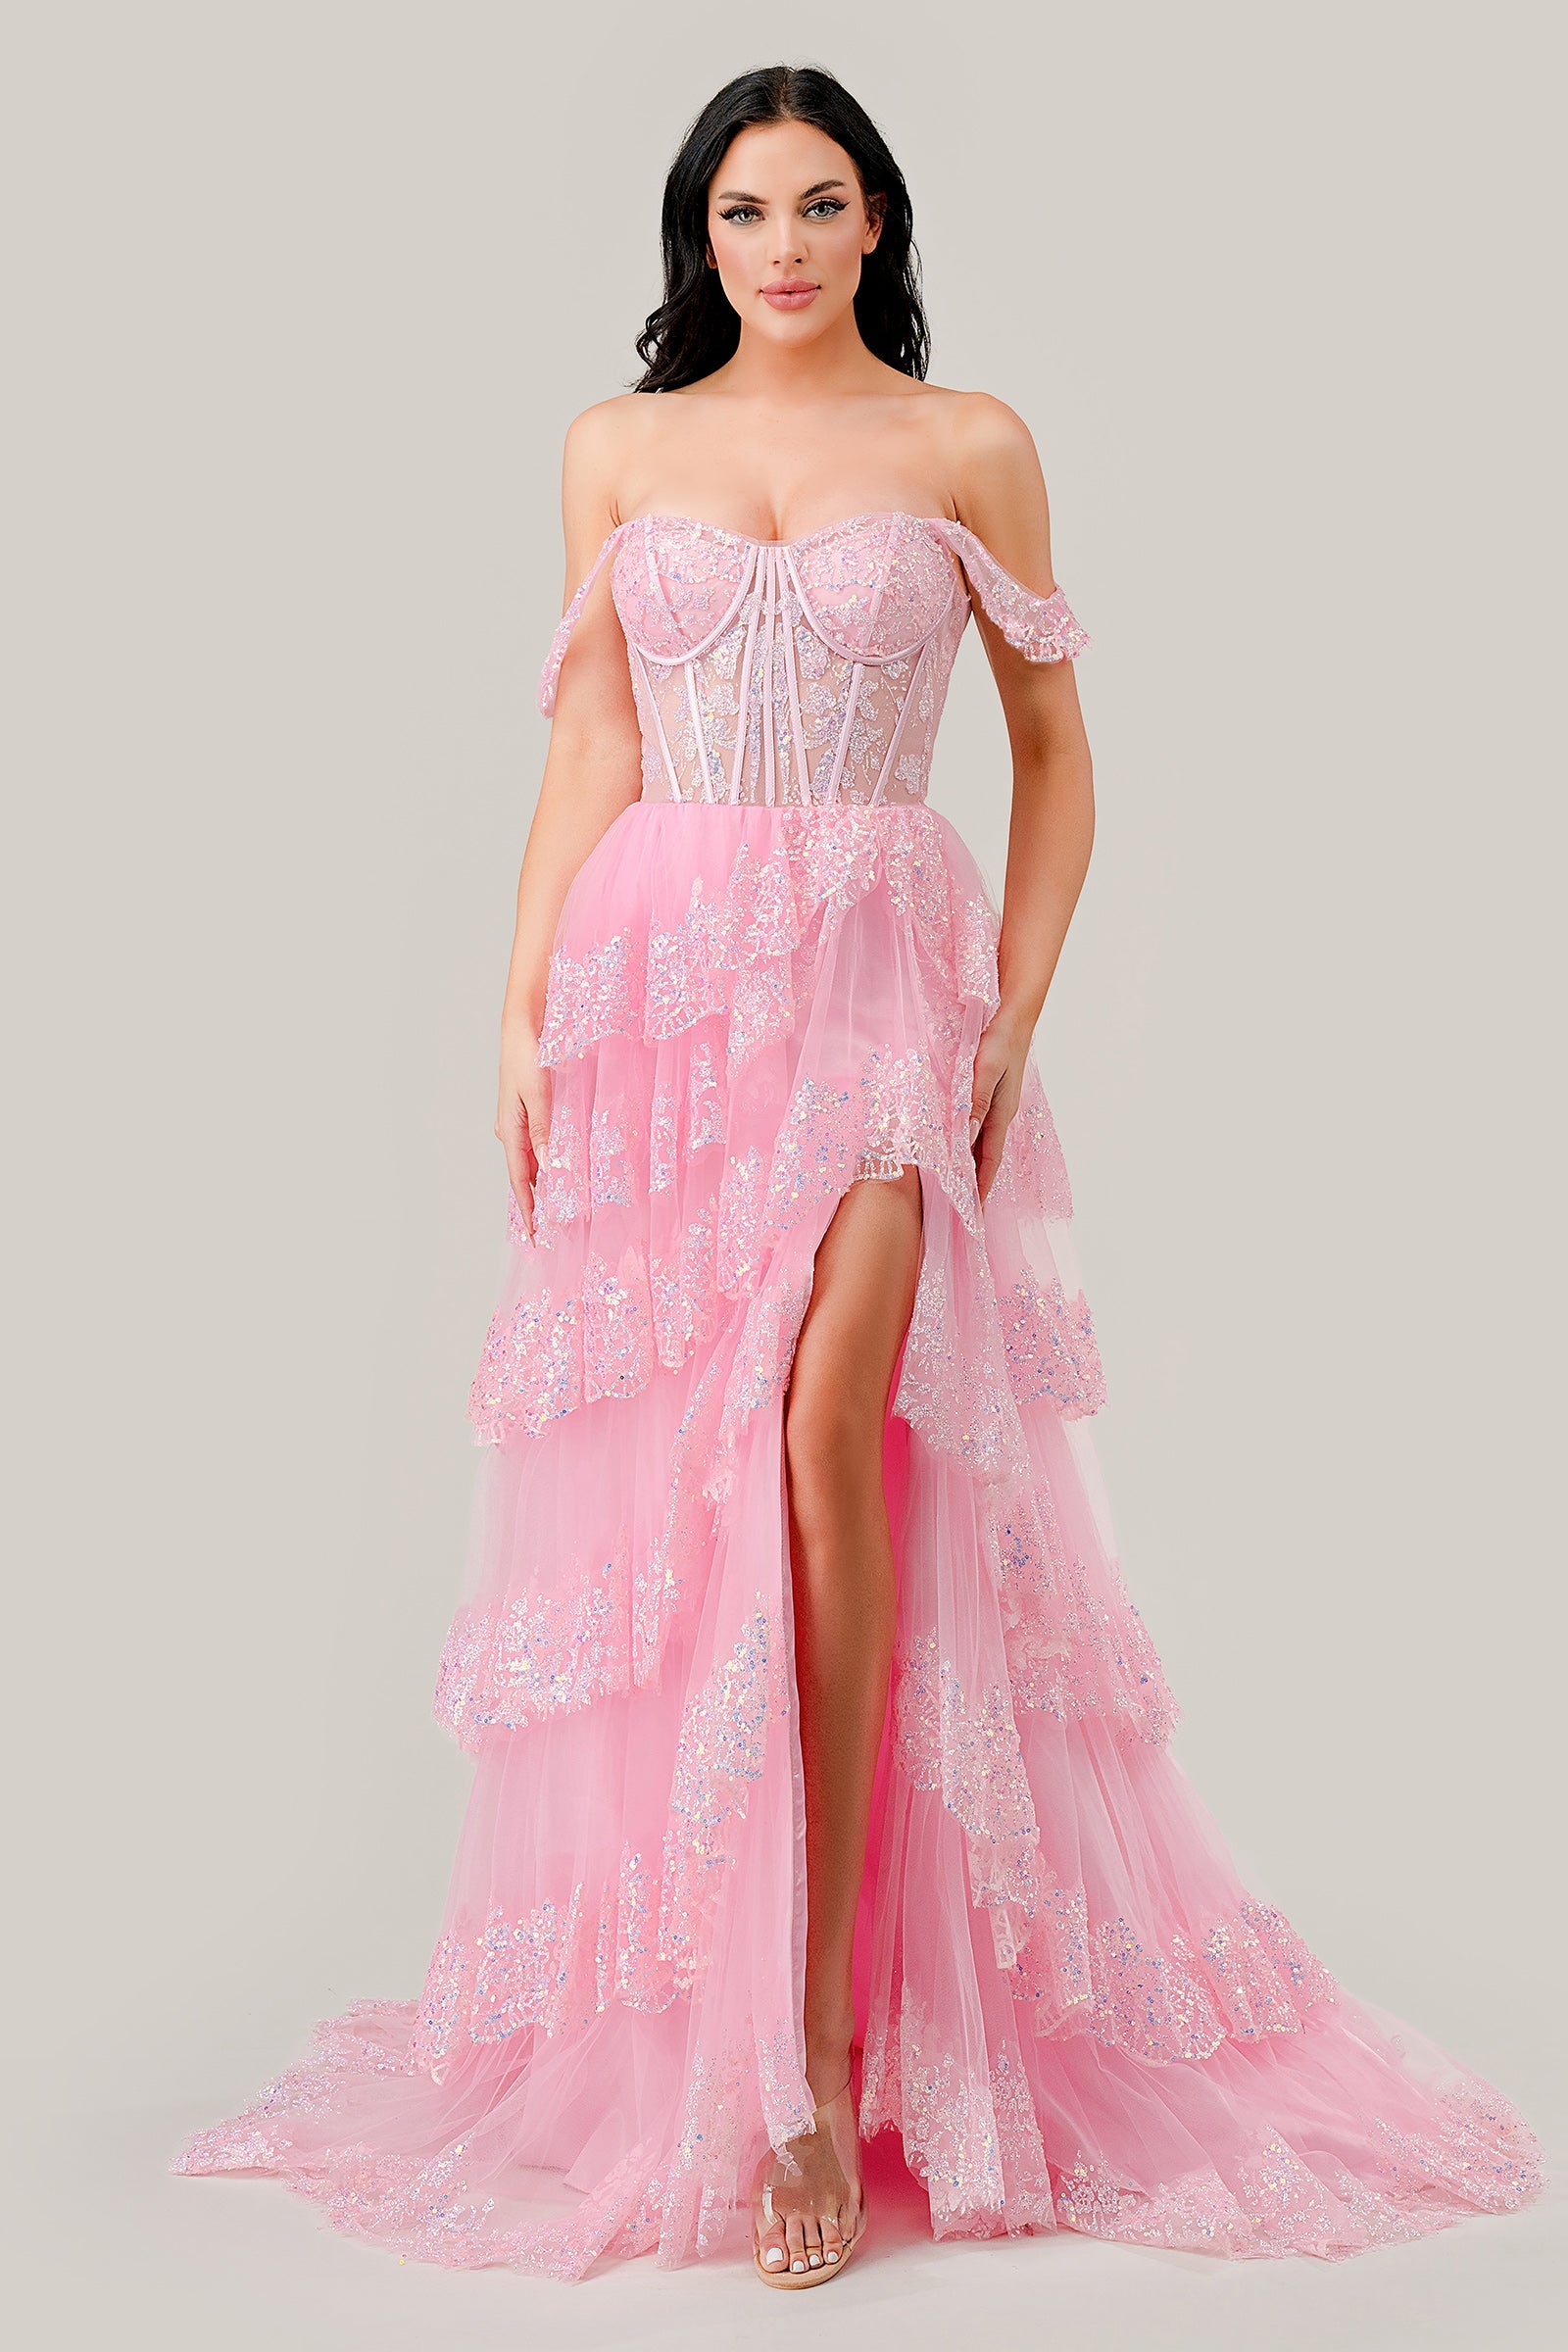 YALA Scalloped Lace Off Shoulder Glitter Corset Prom & Formal Dress